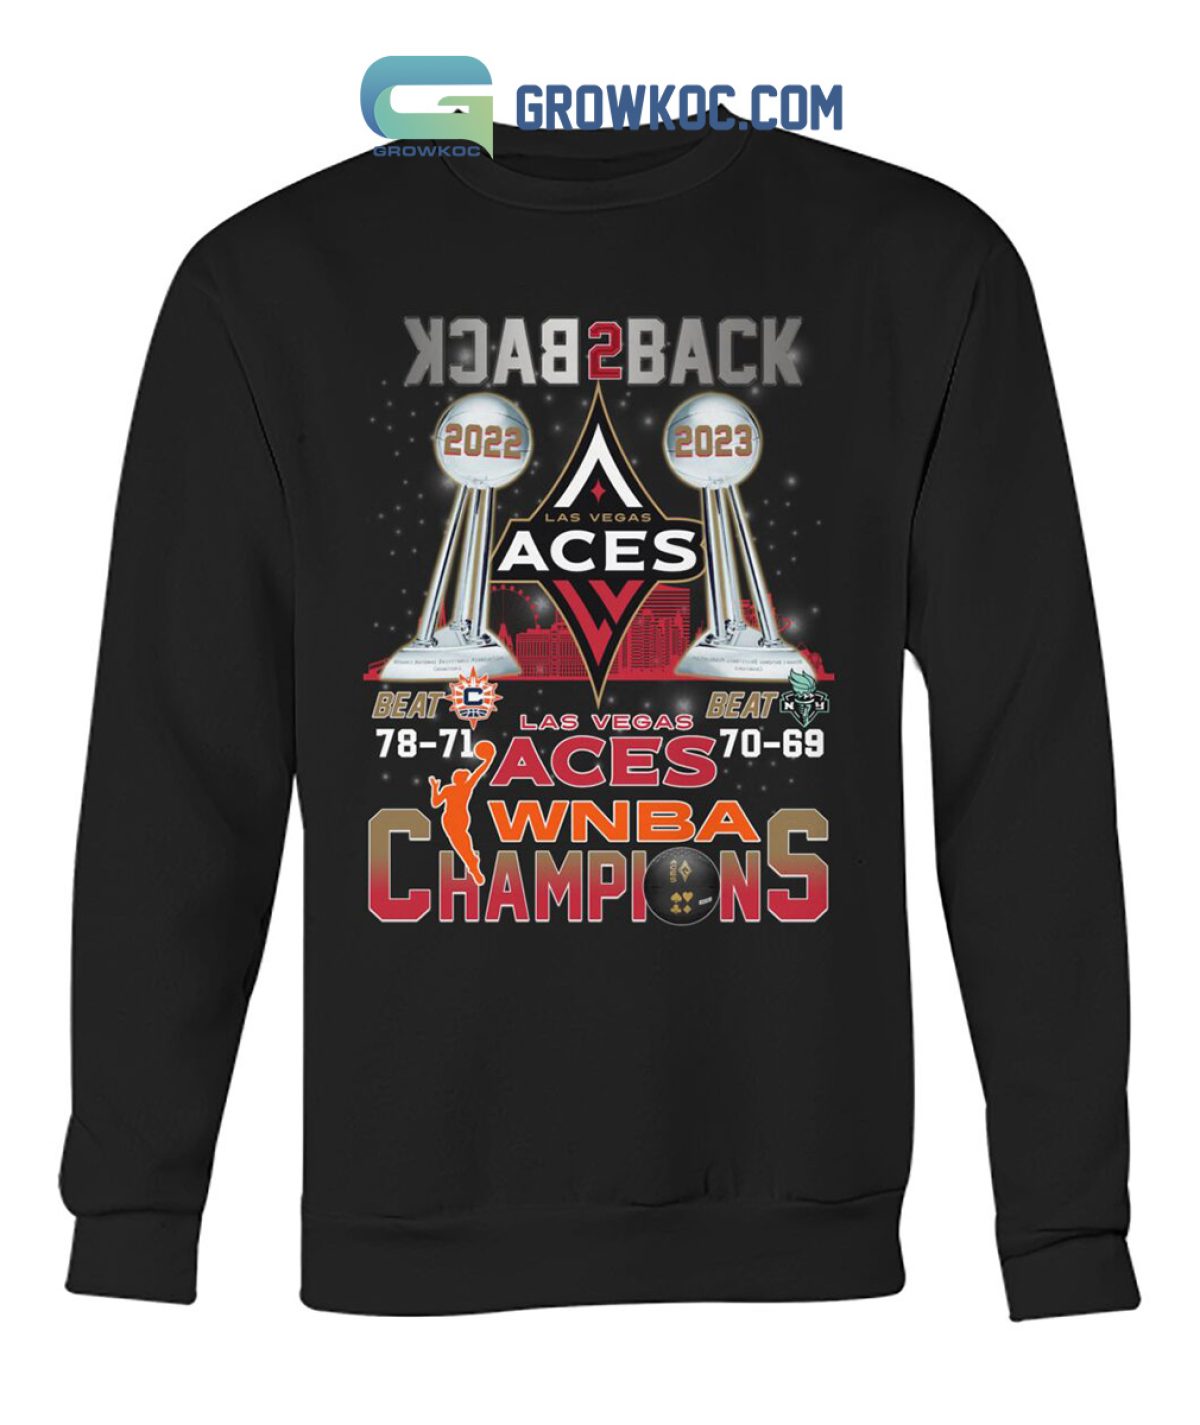 Back 2 Back WNBA 2022 2023 Las Vegas ACES Champions T Shirt - Limotees